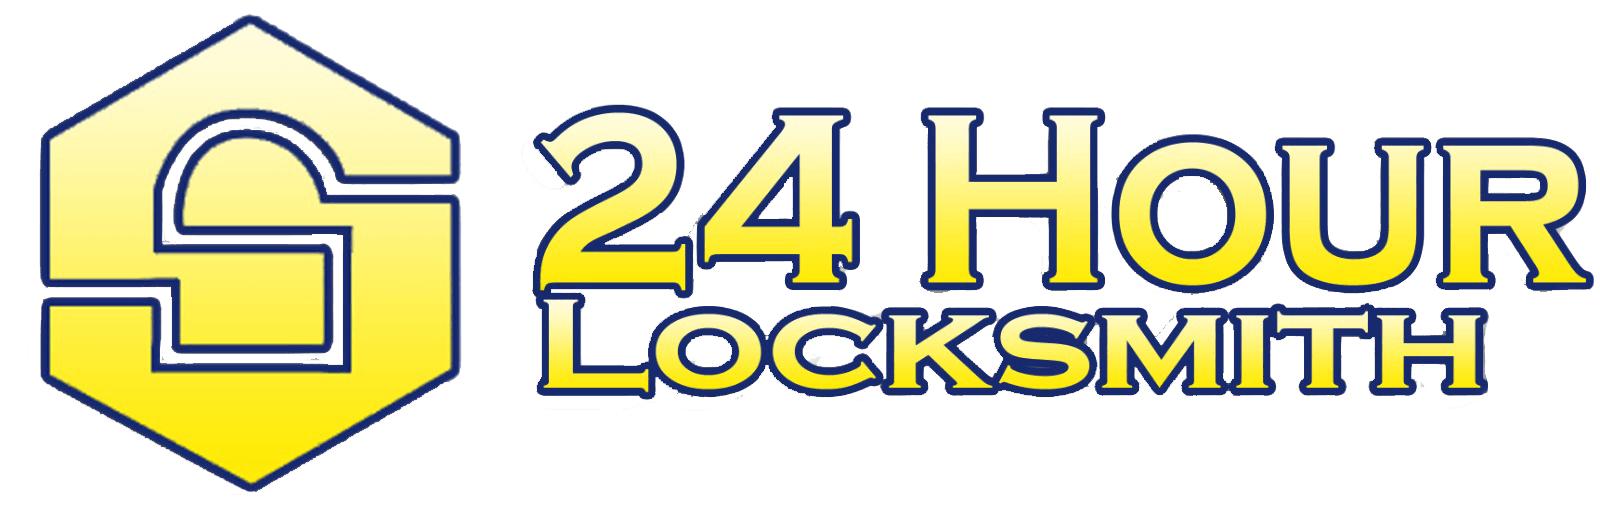 24 Hour Locksmith in Newark, NJ